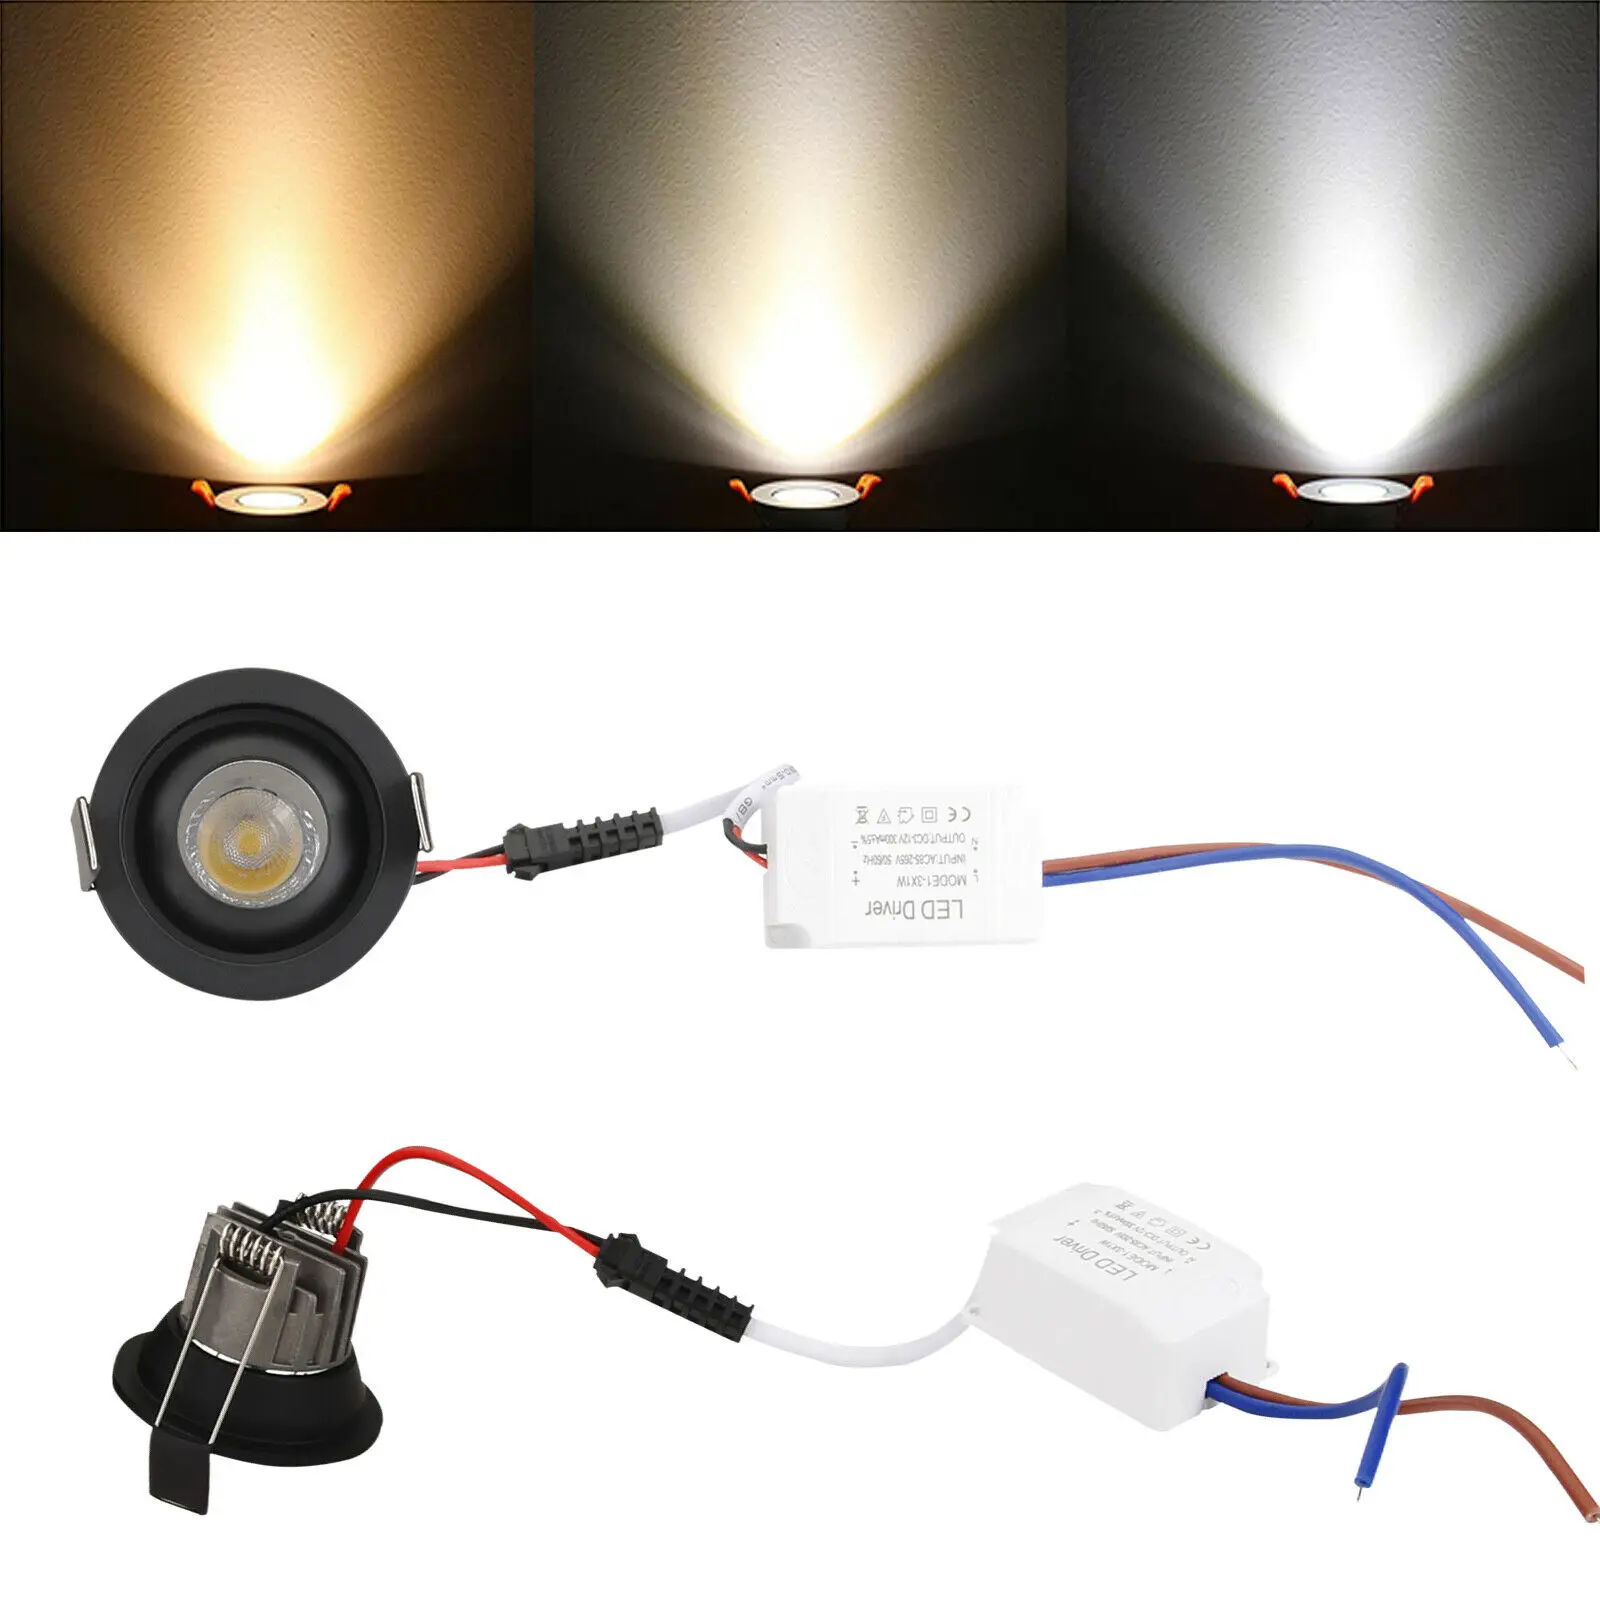 10pcs Dimmable LED COB Recessed Ceiling Downlight Black 3W Spot light Lamp 30W Equivalent Incandescent lamp +Driver 110V 220V